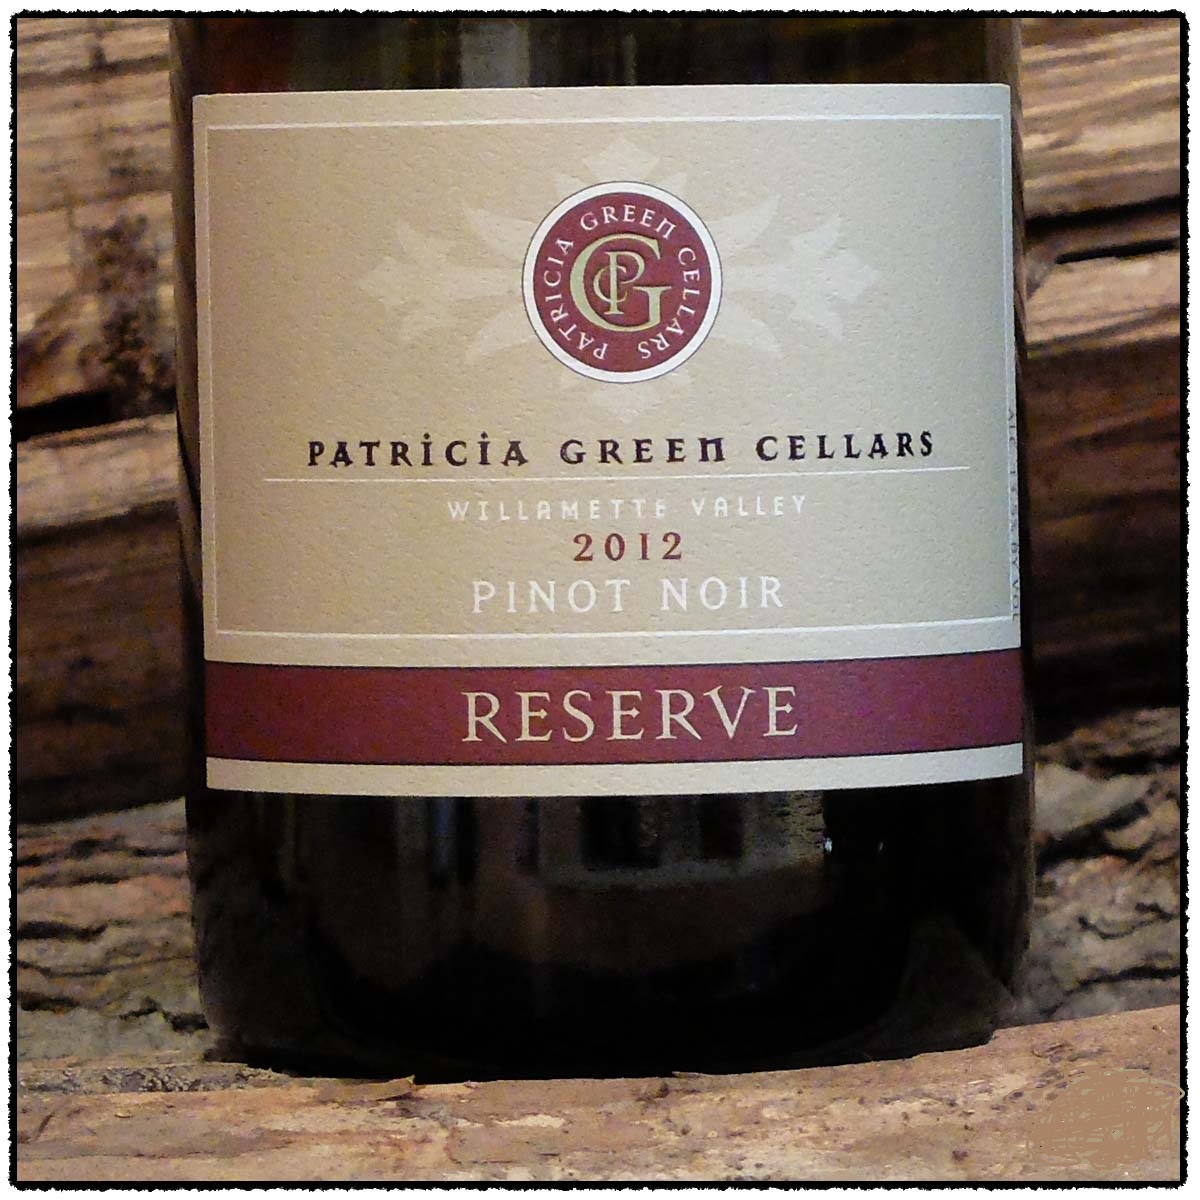 2012 Patricia Green Reserve Pinot Noir - click image for full description